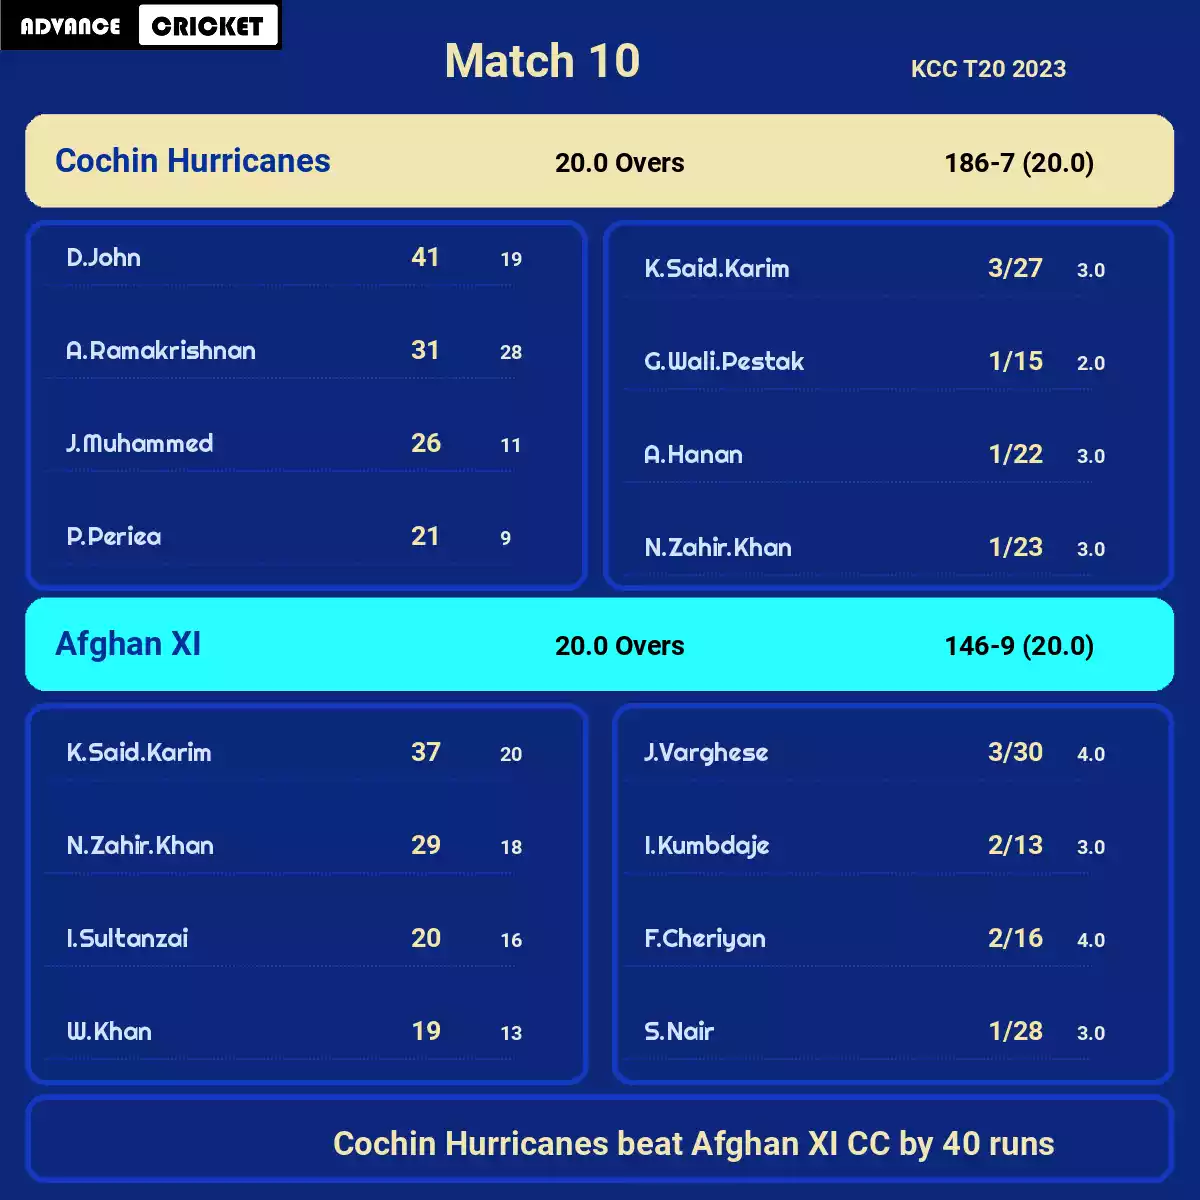 COH vs AFG-XI Match 10 KCC T20 2023